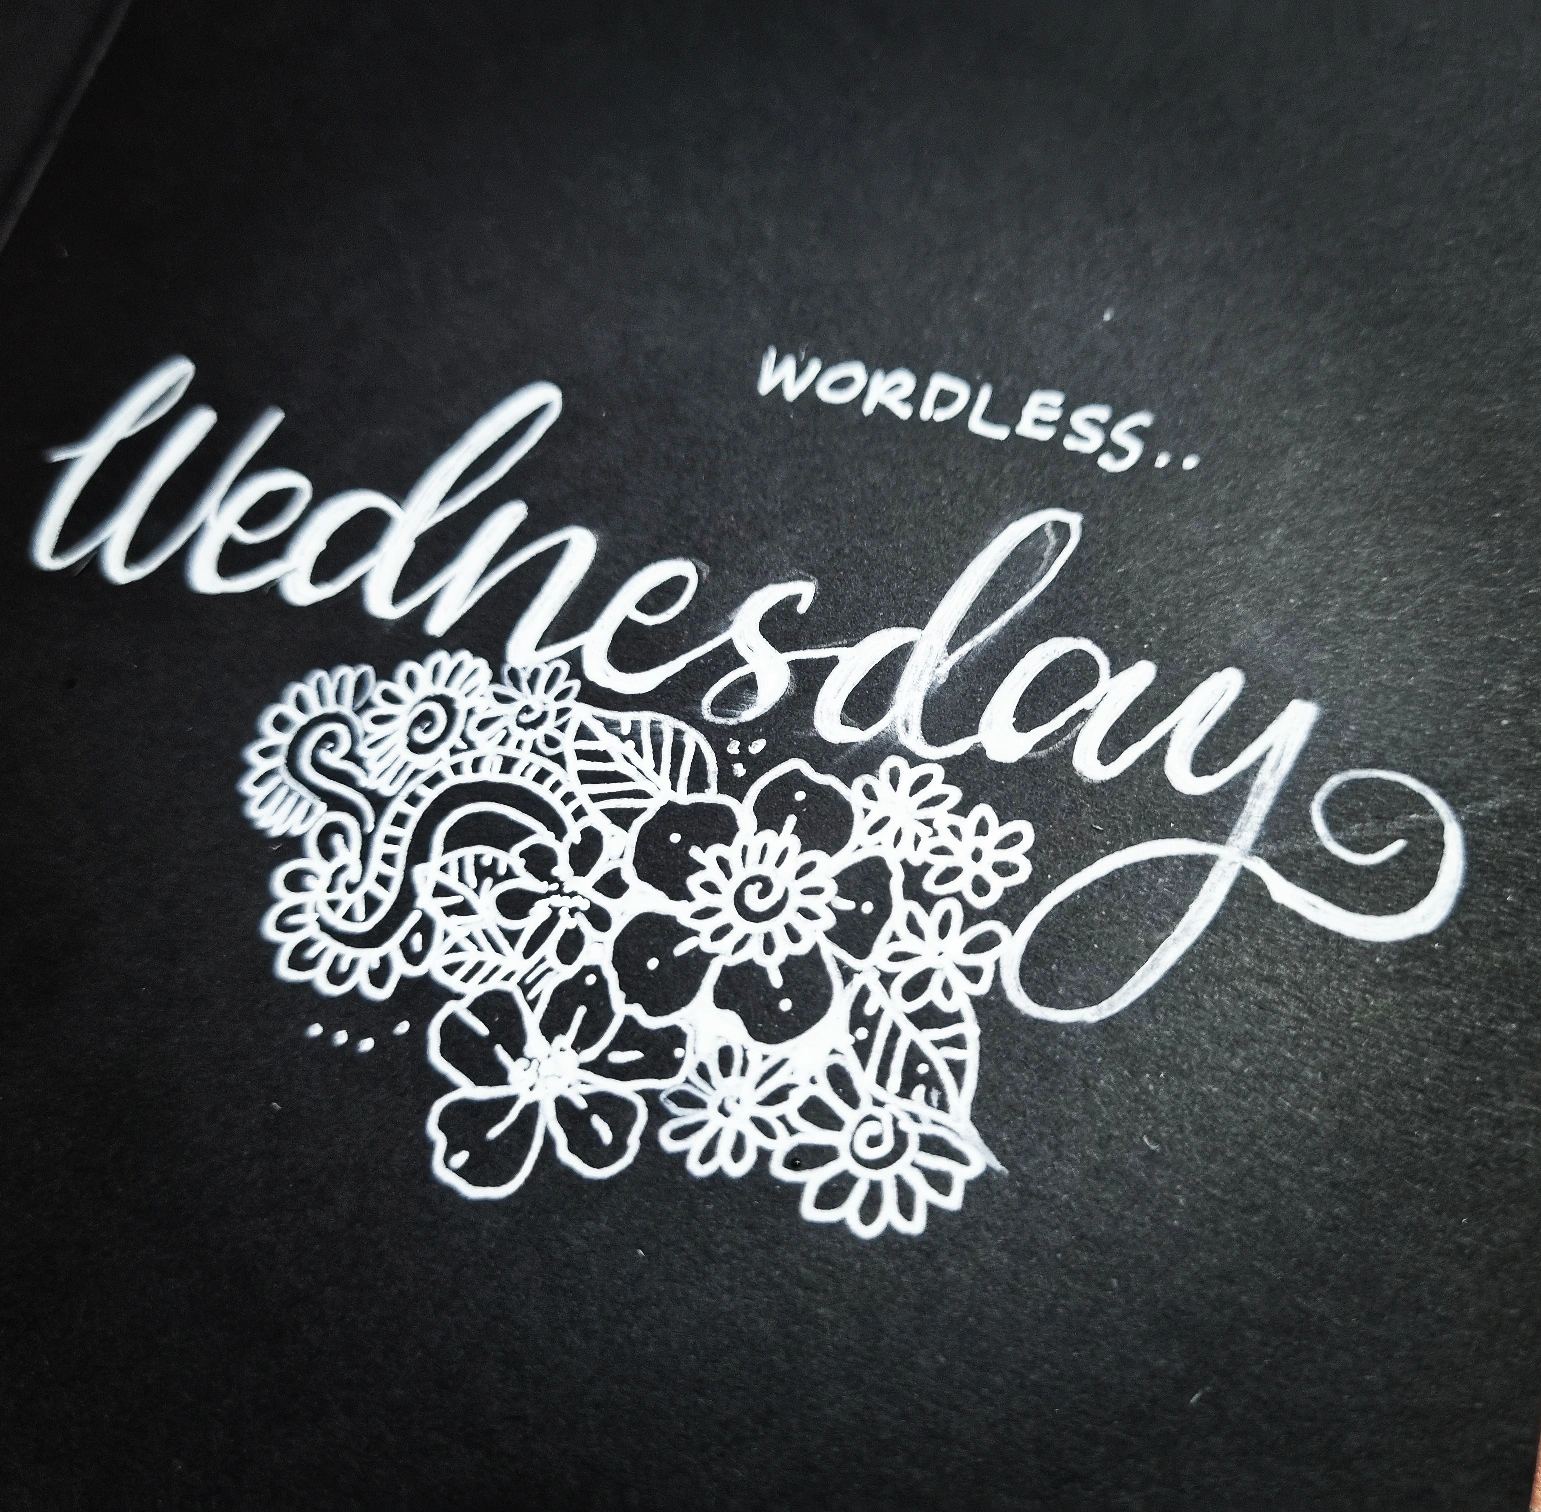 Wordless Wednesday 88 – Black & White Doodle